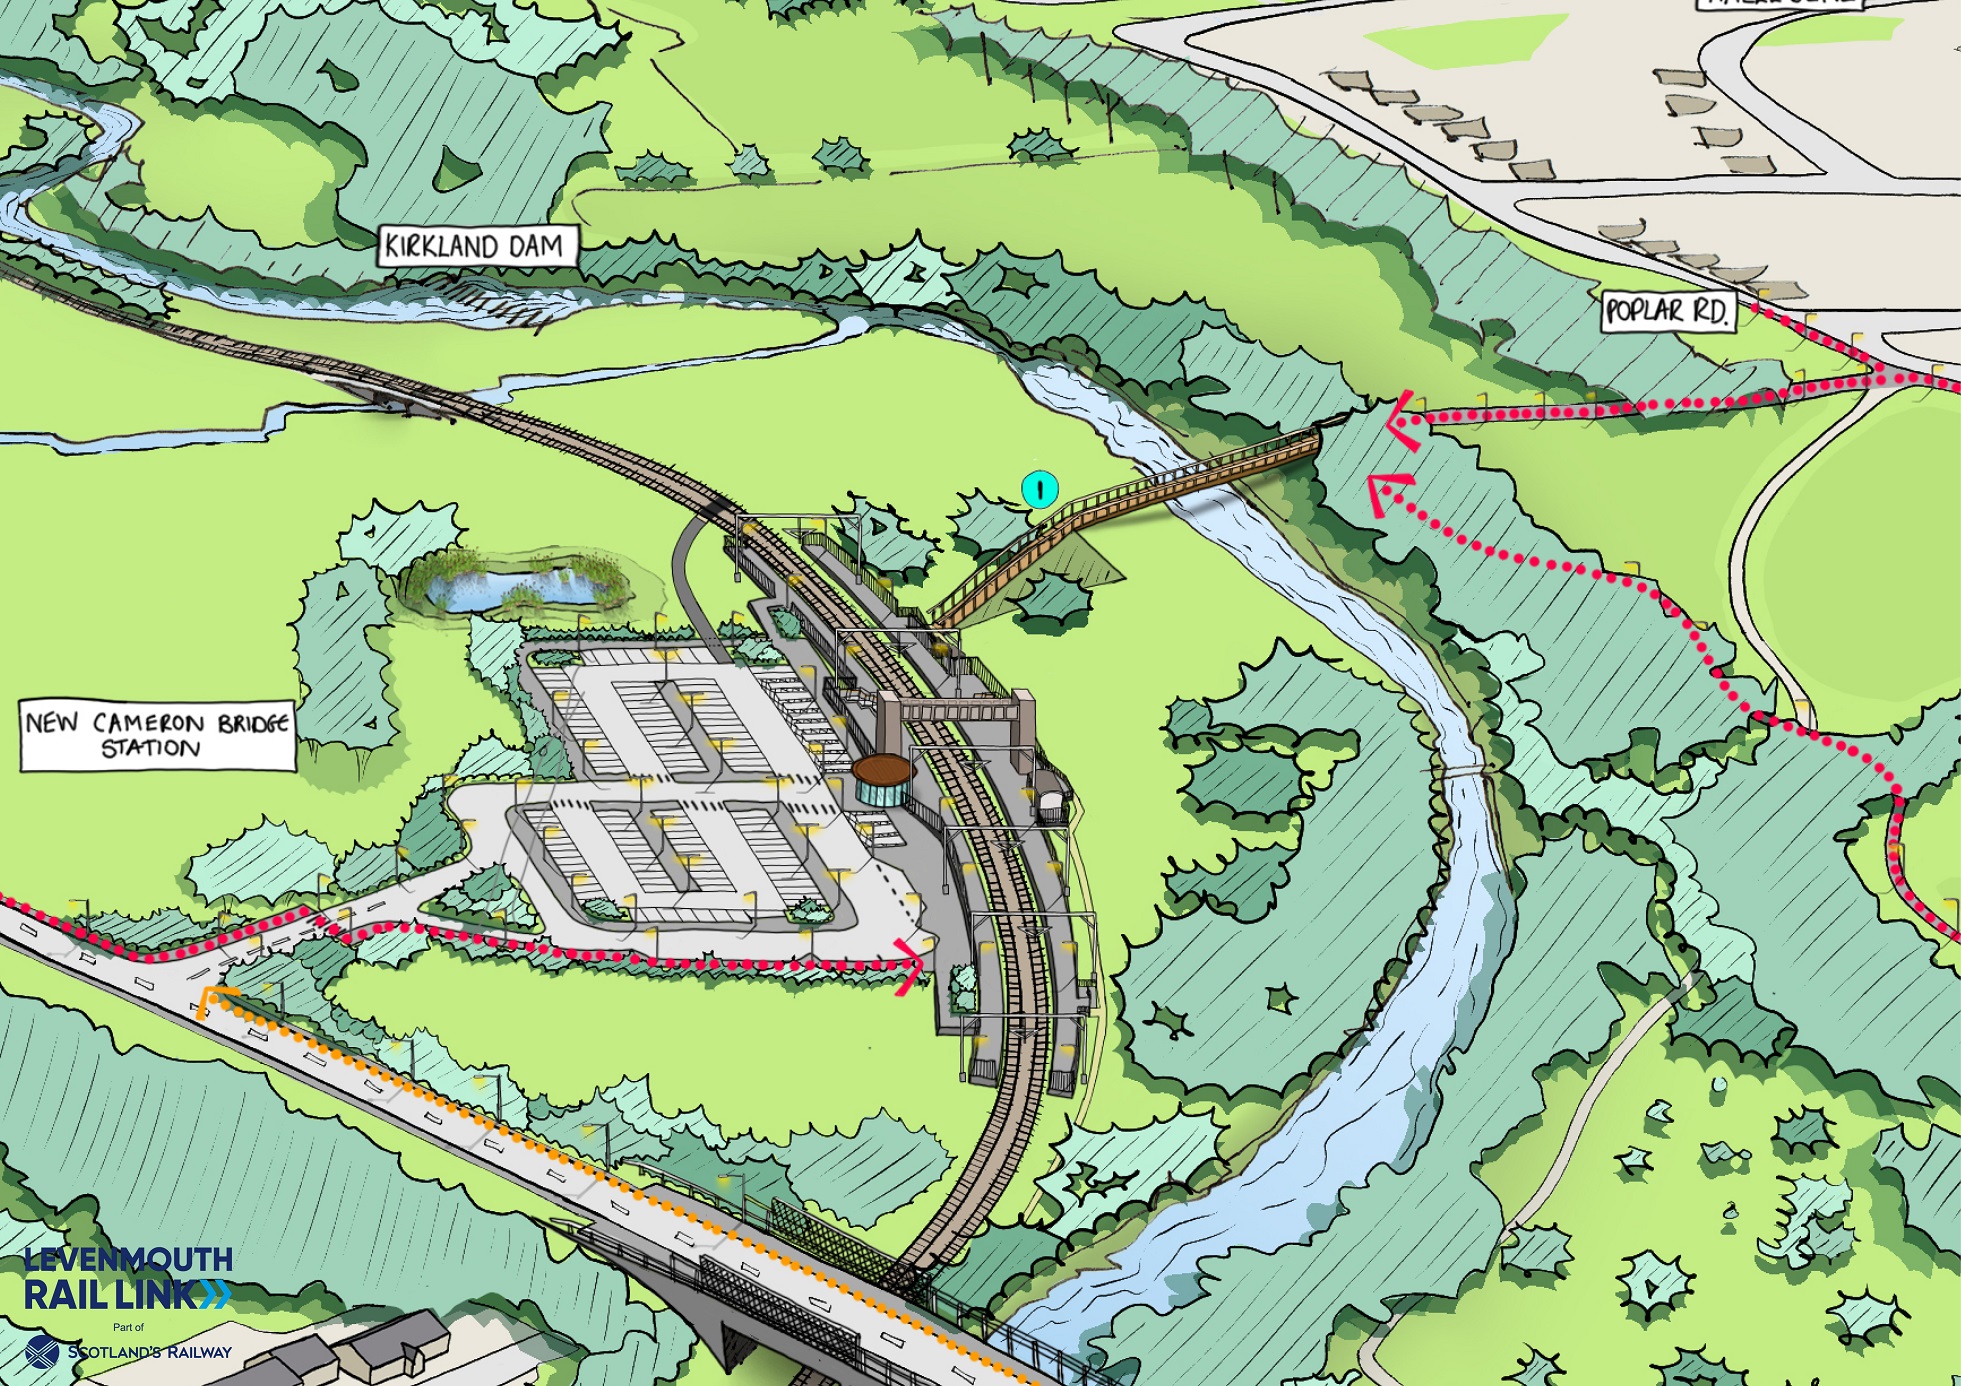 Planning permission granted for Cameron Bridge station